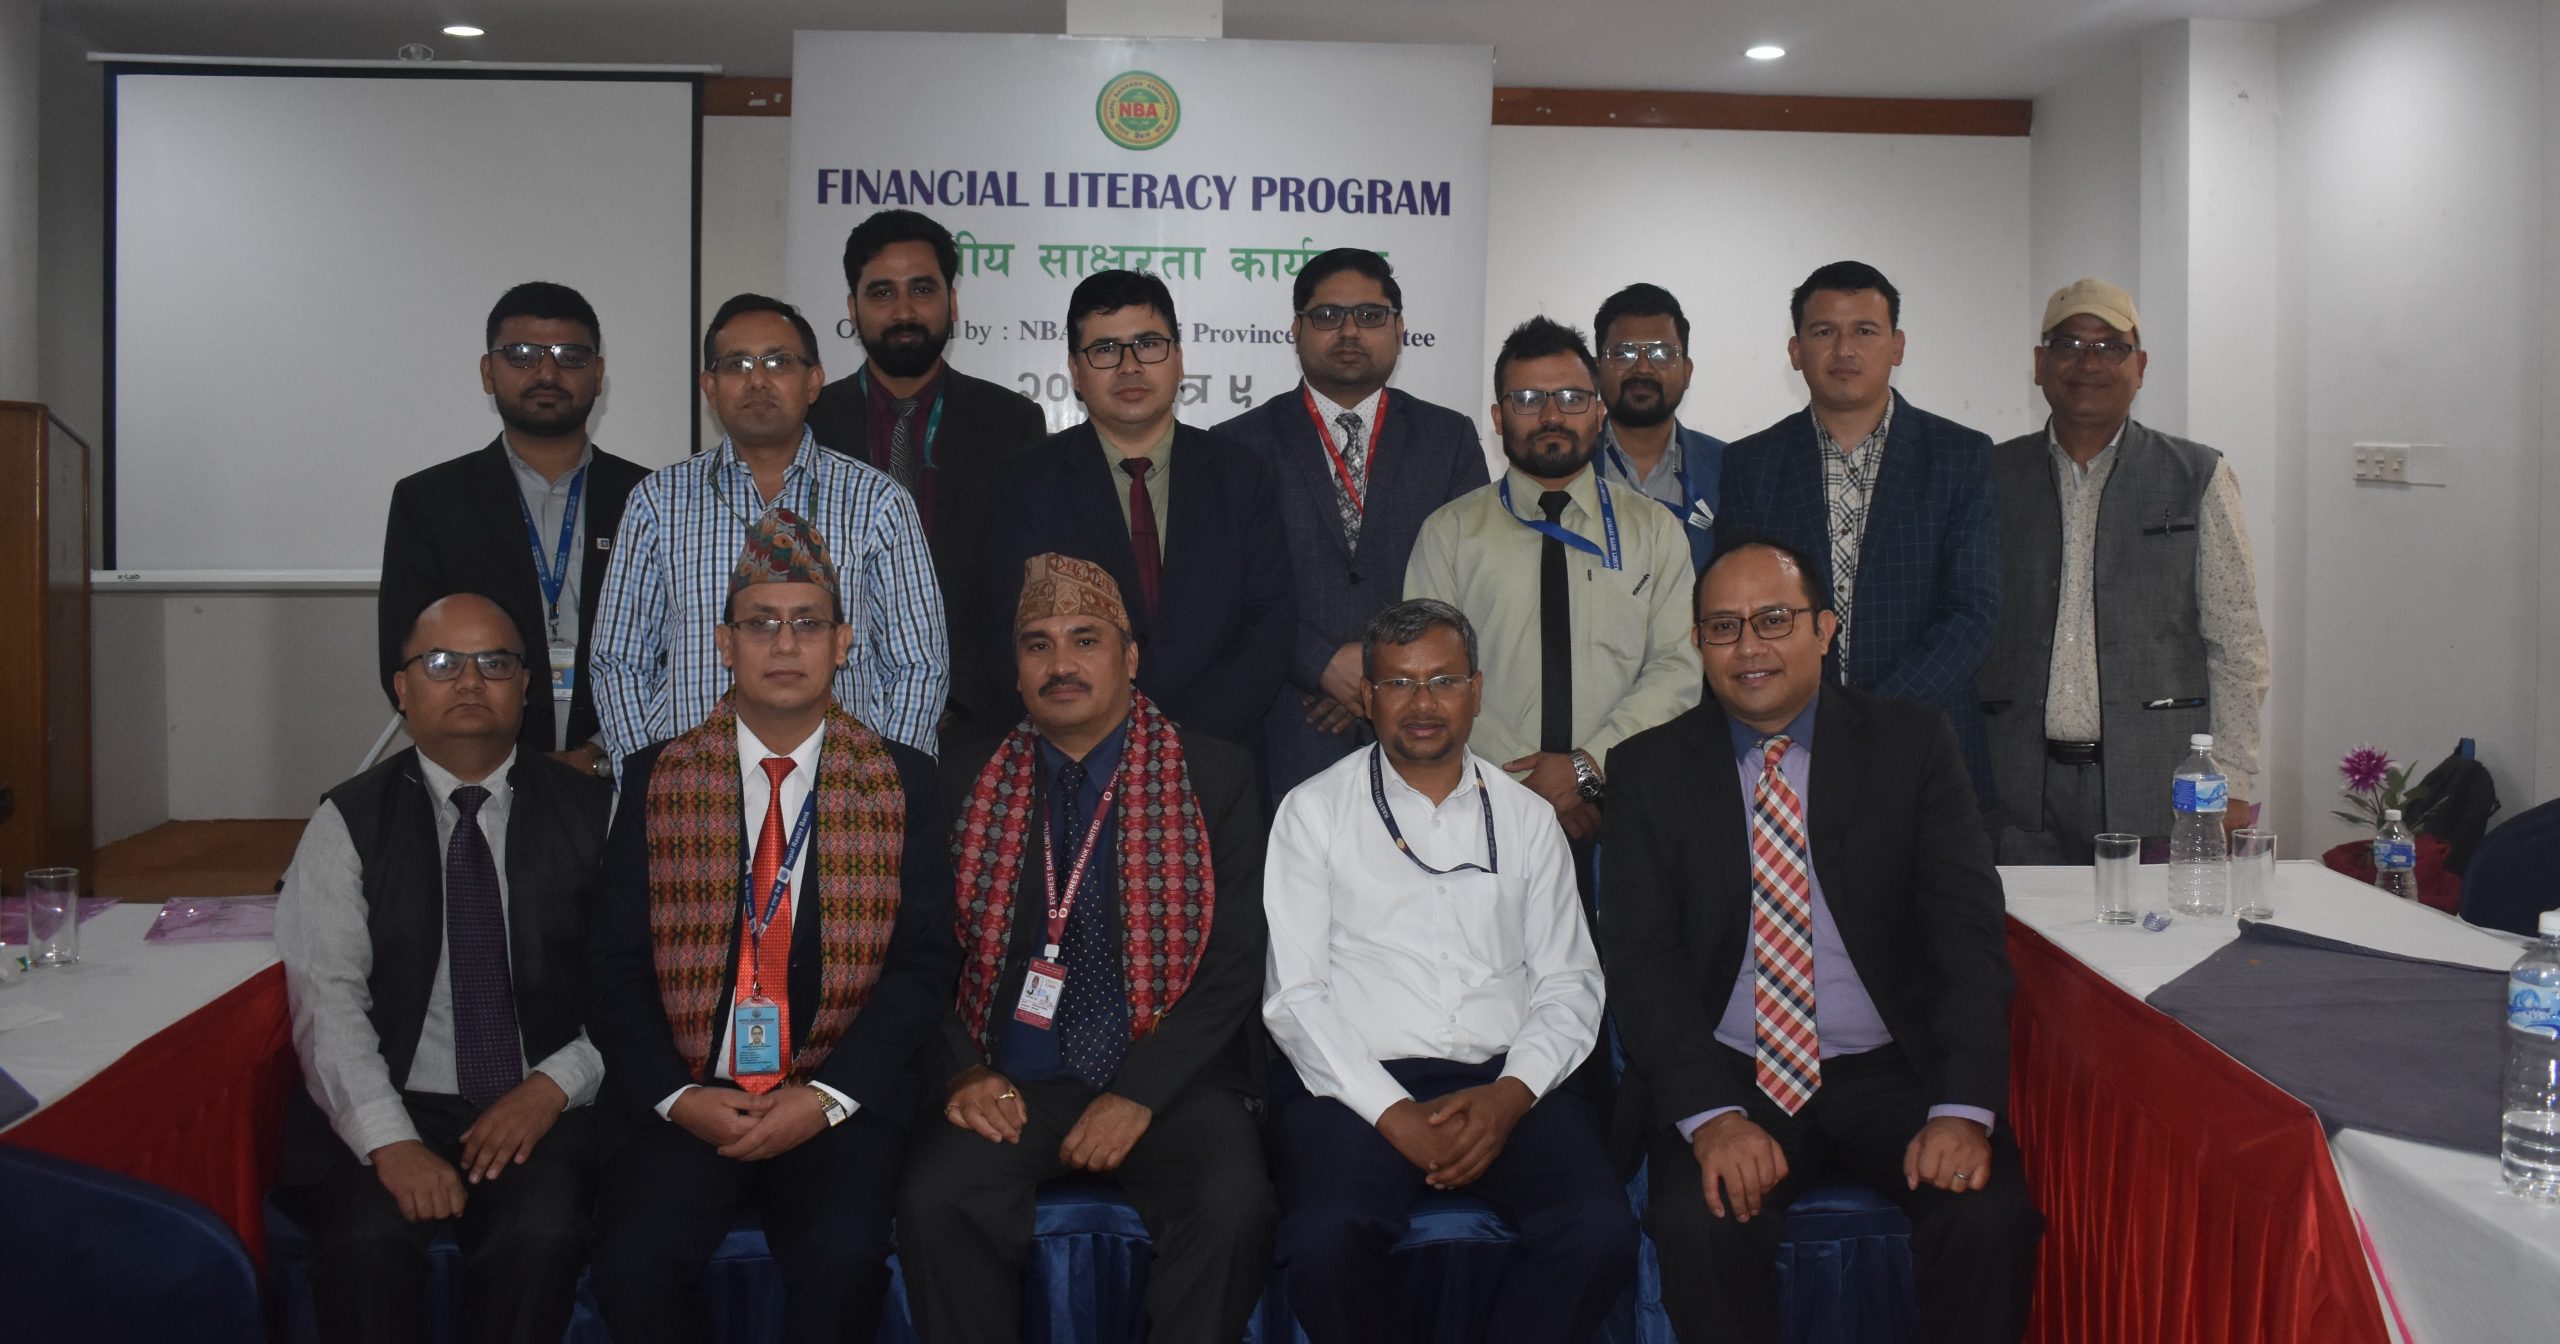 नेपाल बैंकर्स संघको कर्णाली प्रदेशमा वित्तीय साक्षरता कार्यक्रम संचालन